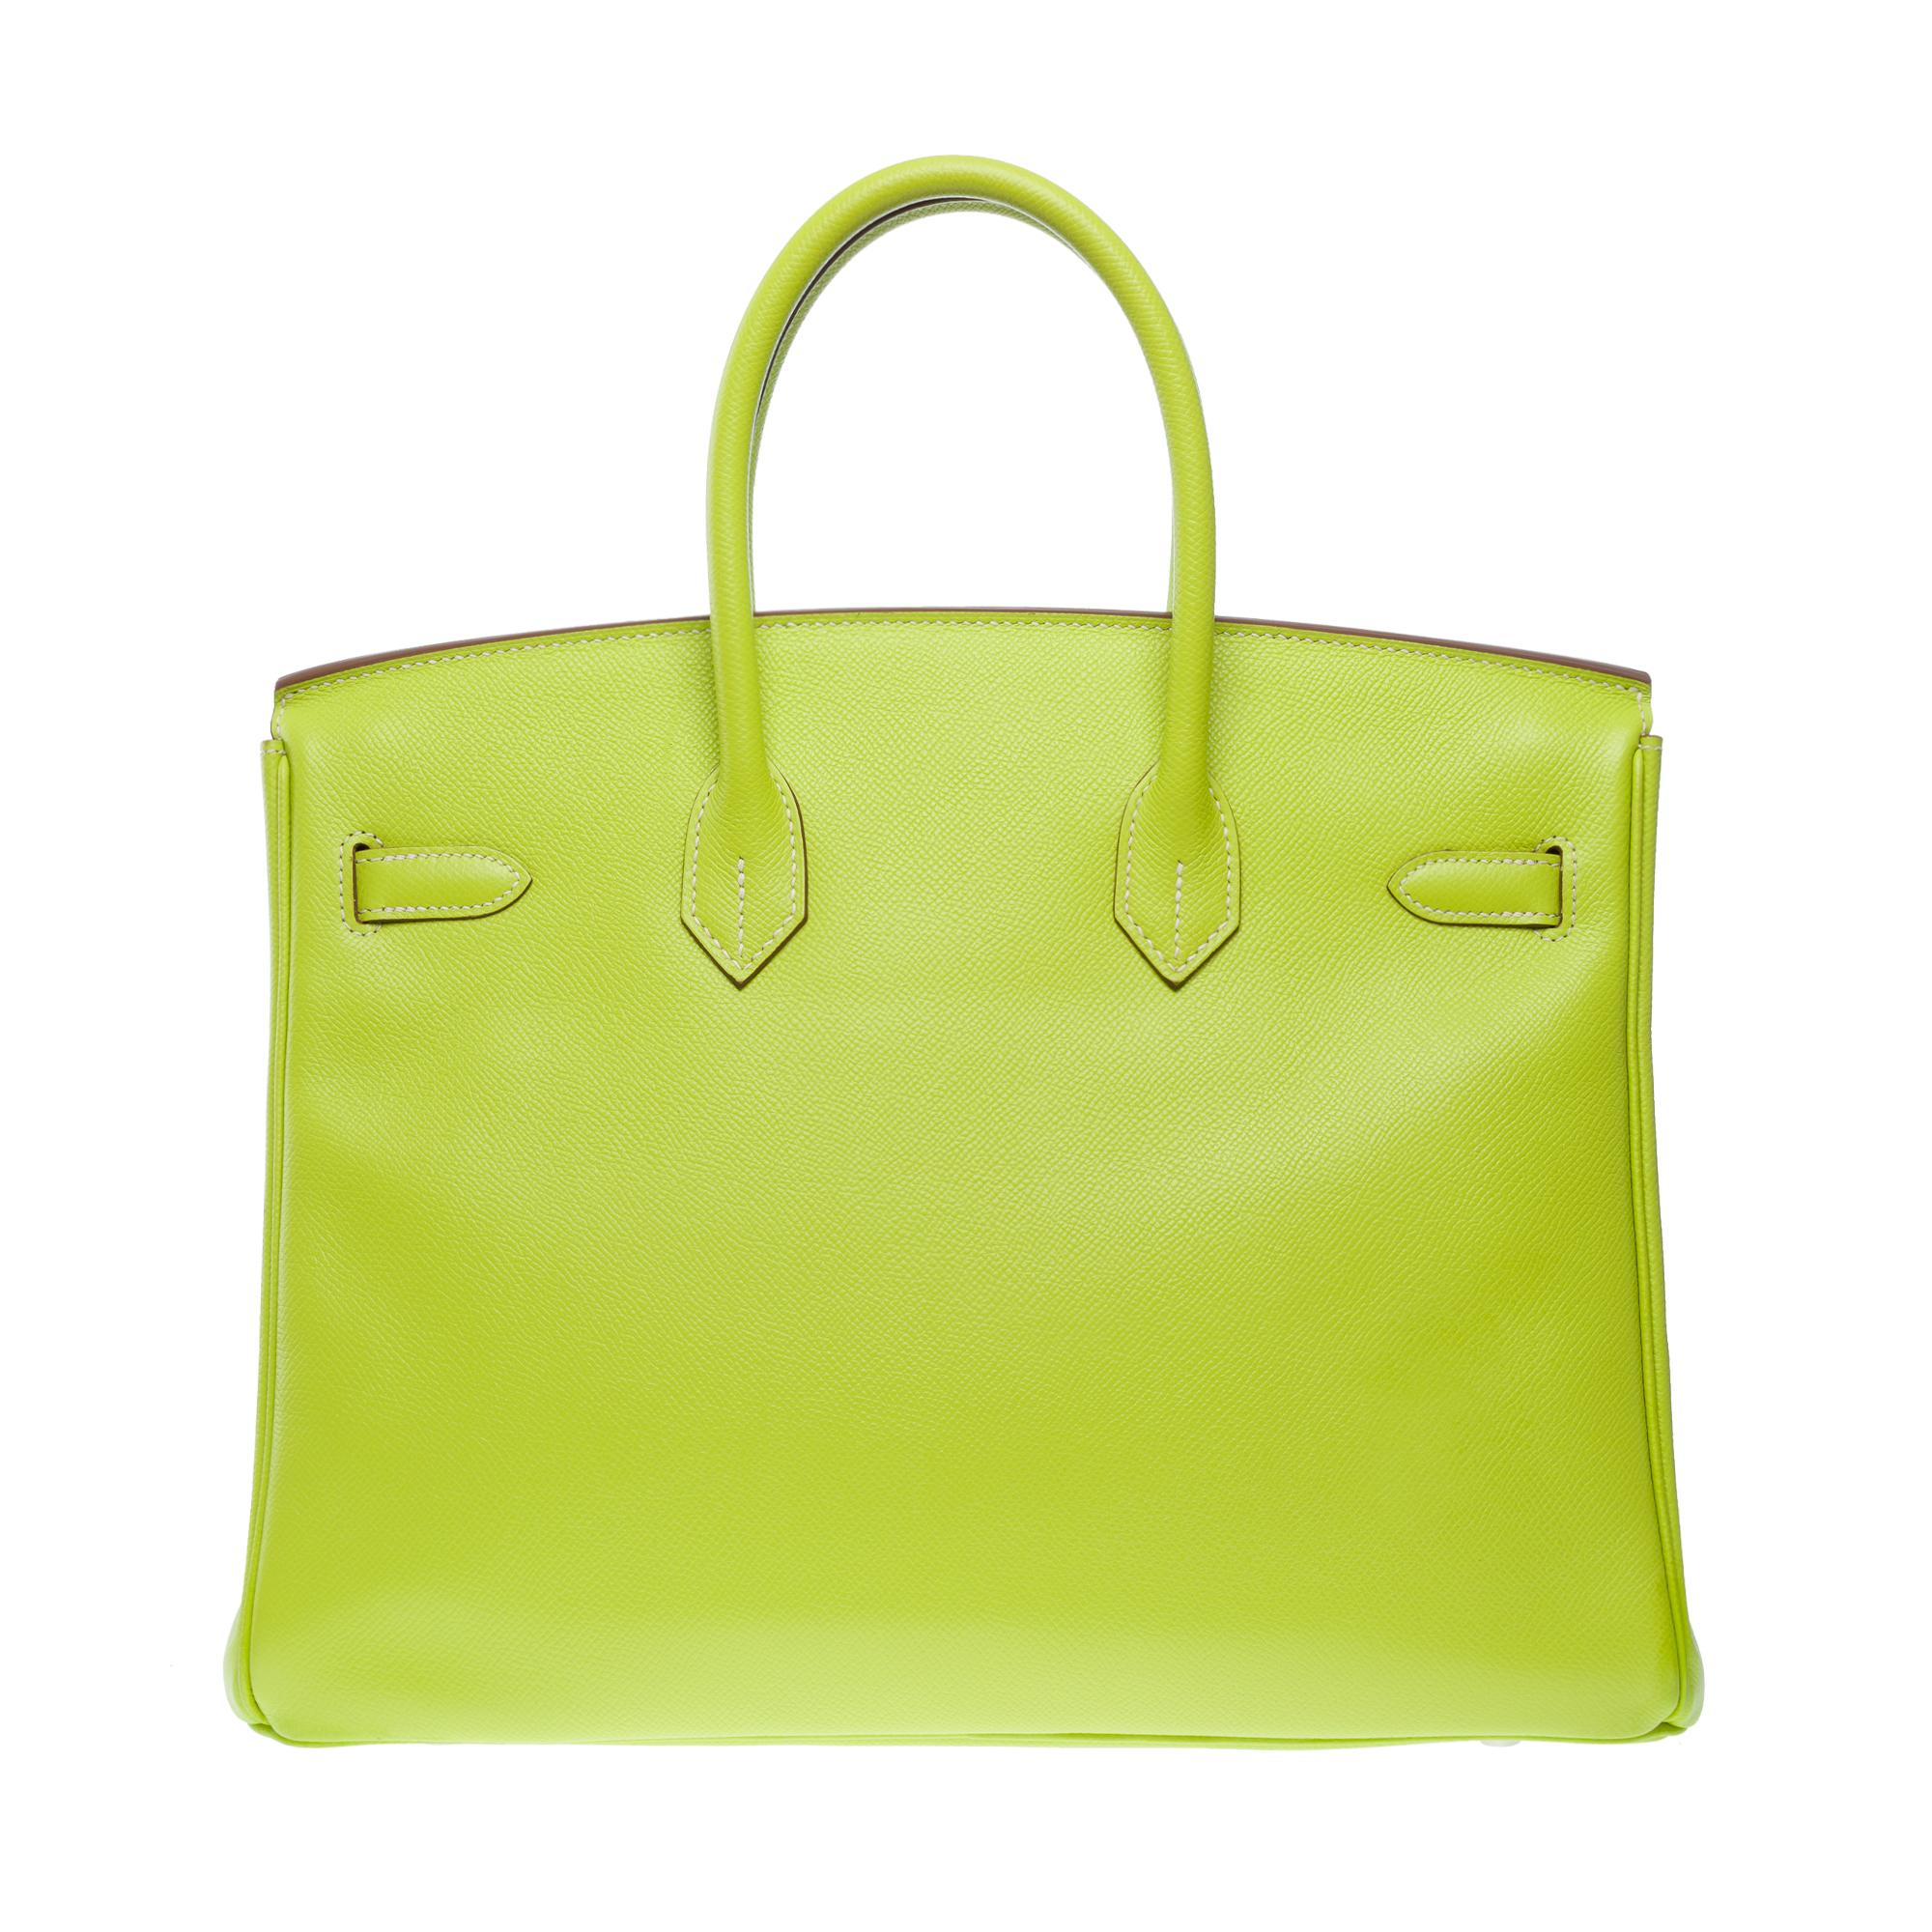 Women's or Men's Candy limited edition Hermès Birkin 35 handbag in Kiwi Green epsom leather, SHW